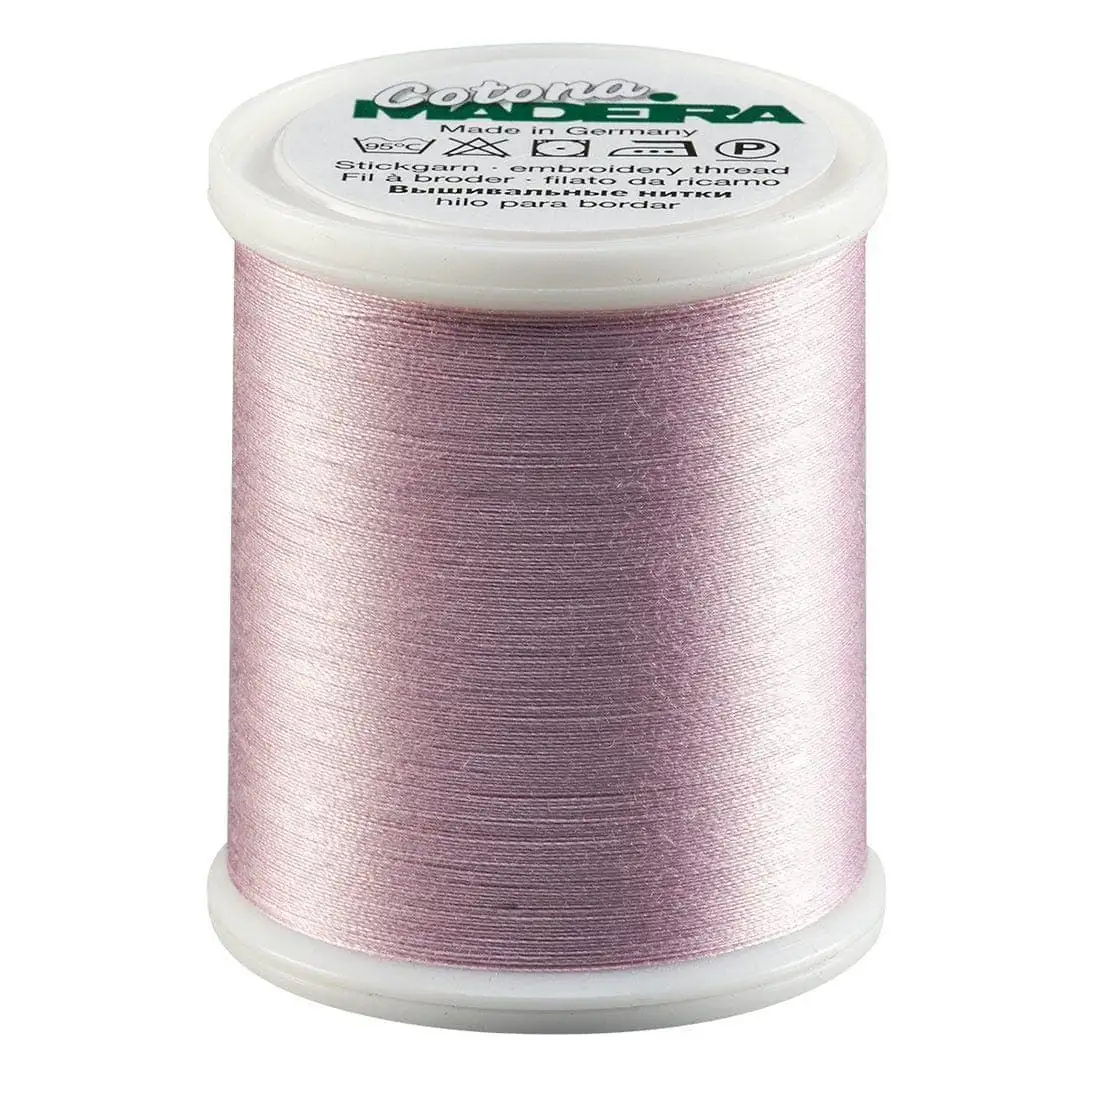 Madeira Cotona 50wt Cotton - 640 Pale Lavender